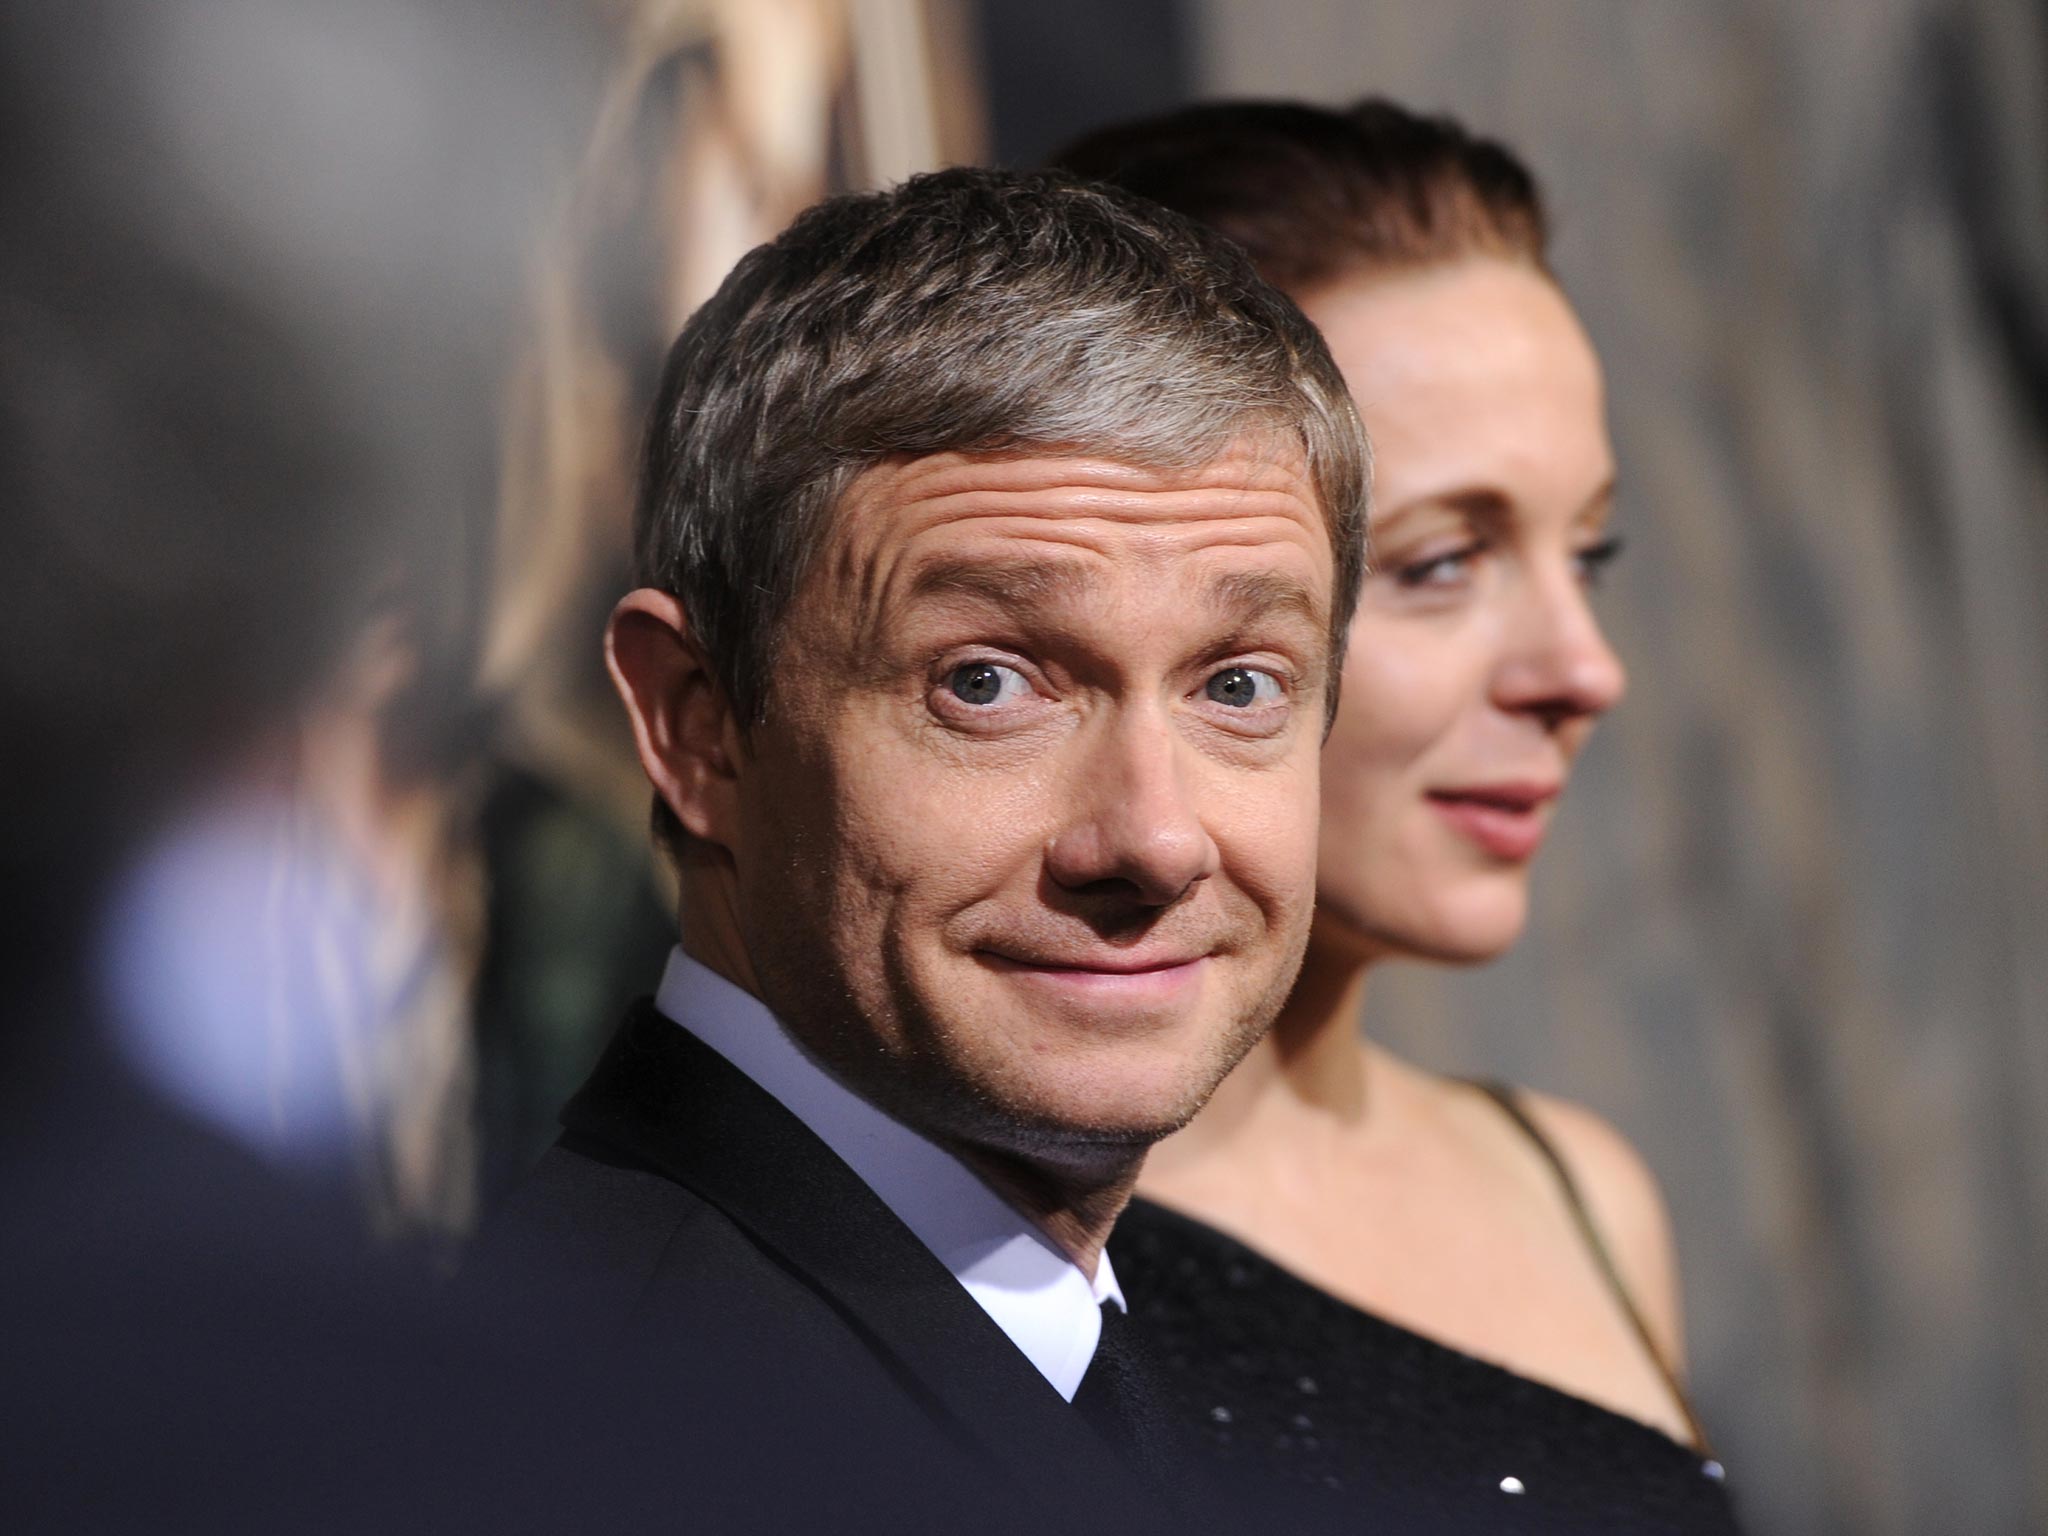 Martin Freeman's profile has soared since 'Sherlock'